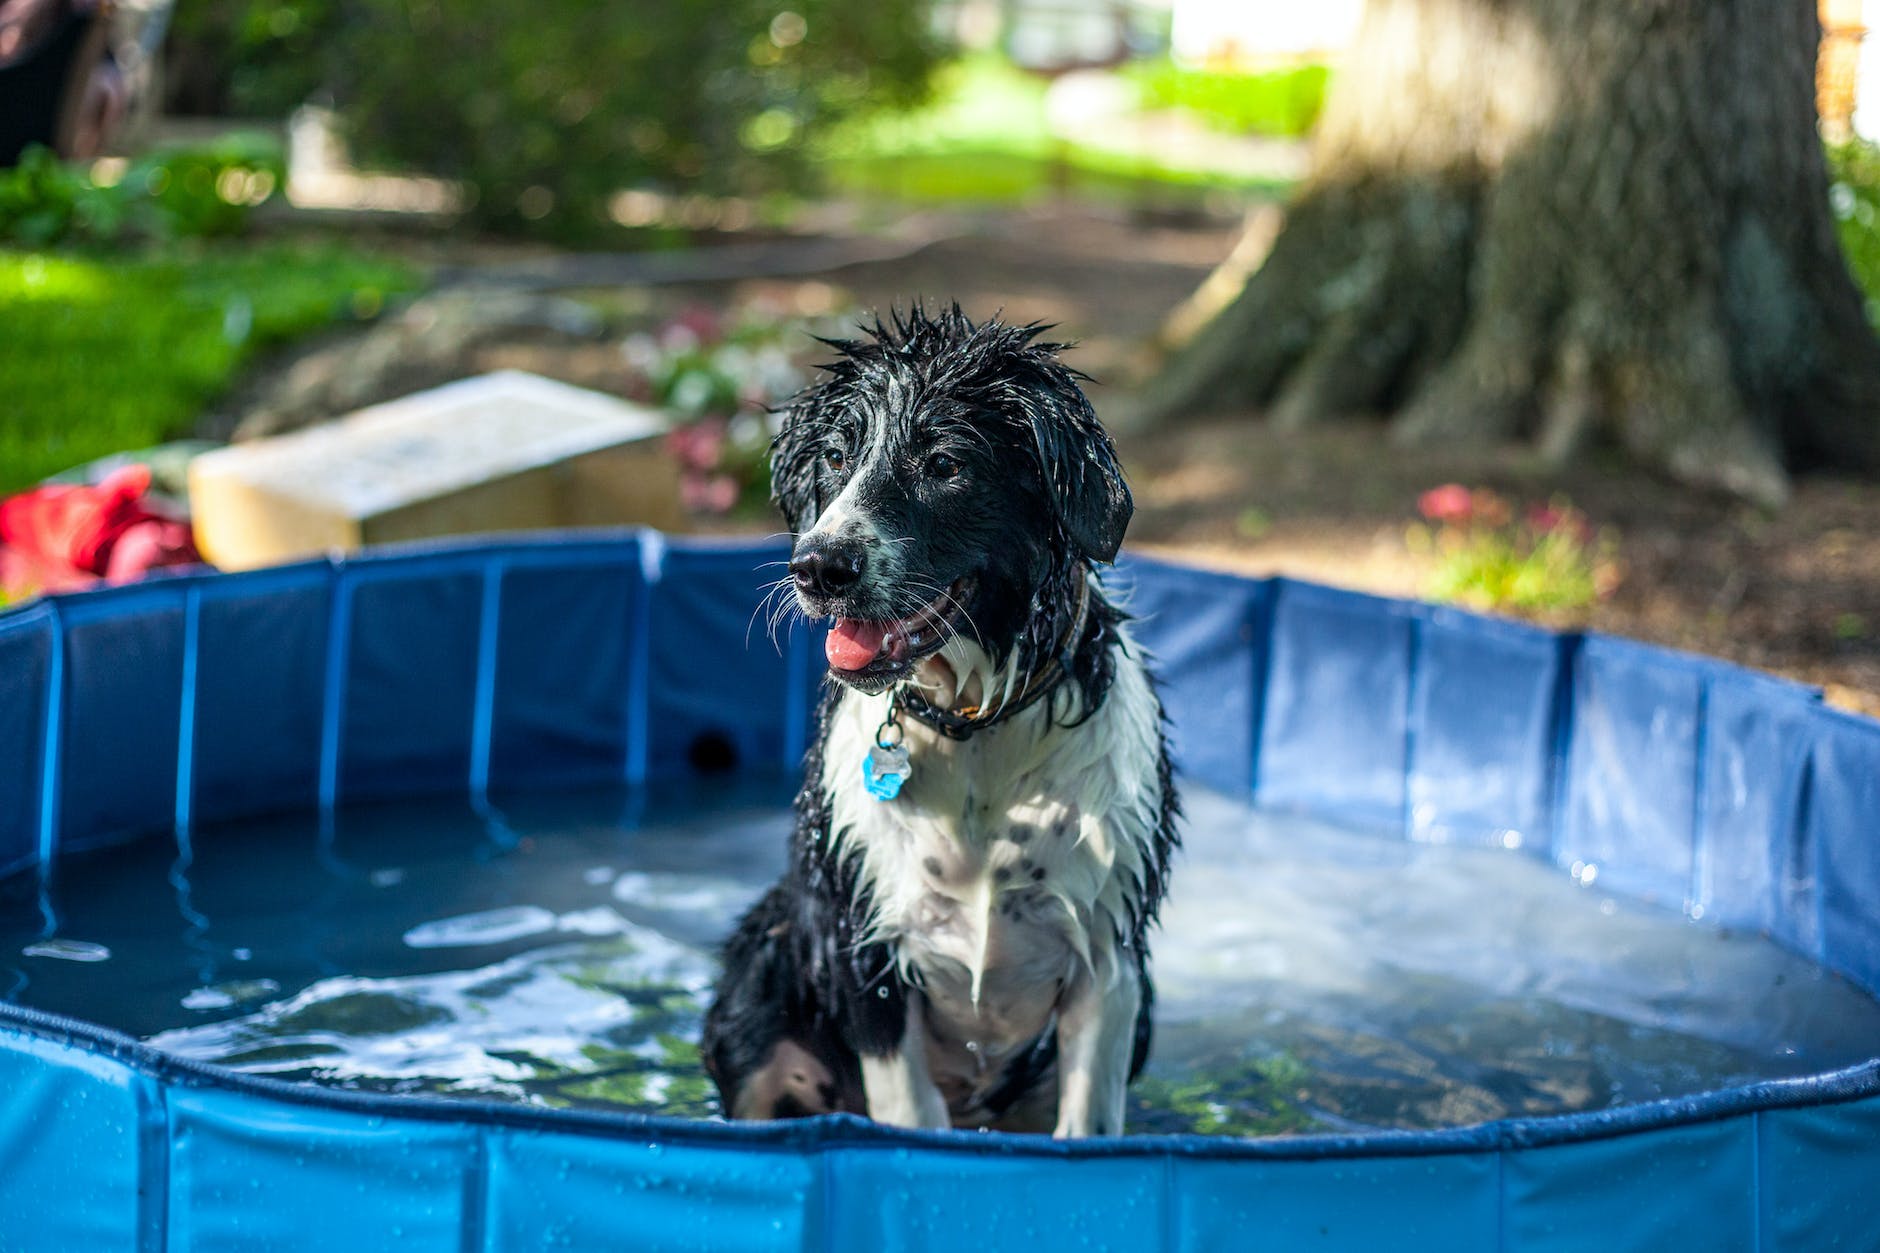 Mejores piscinas para perros - a wet dog in a pool